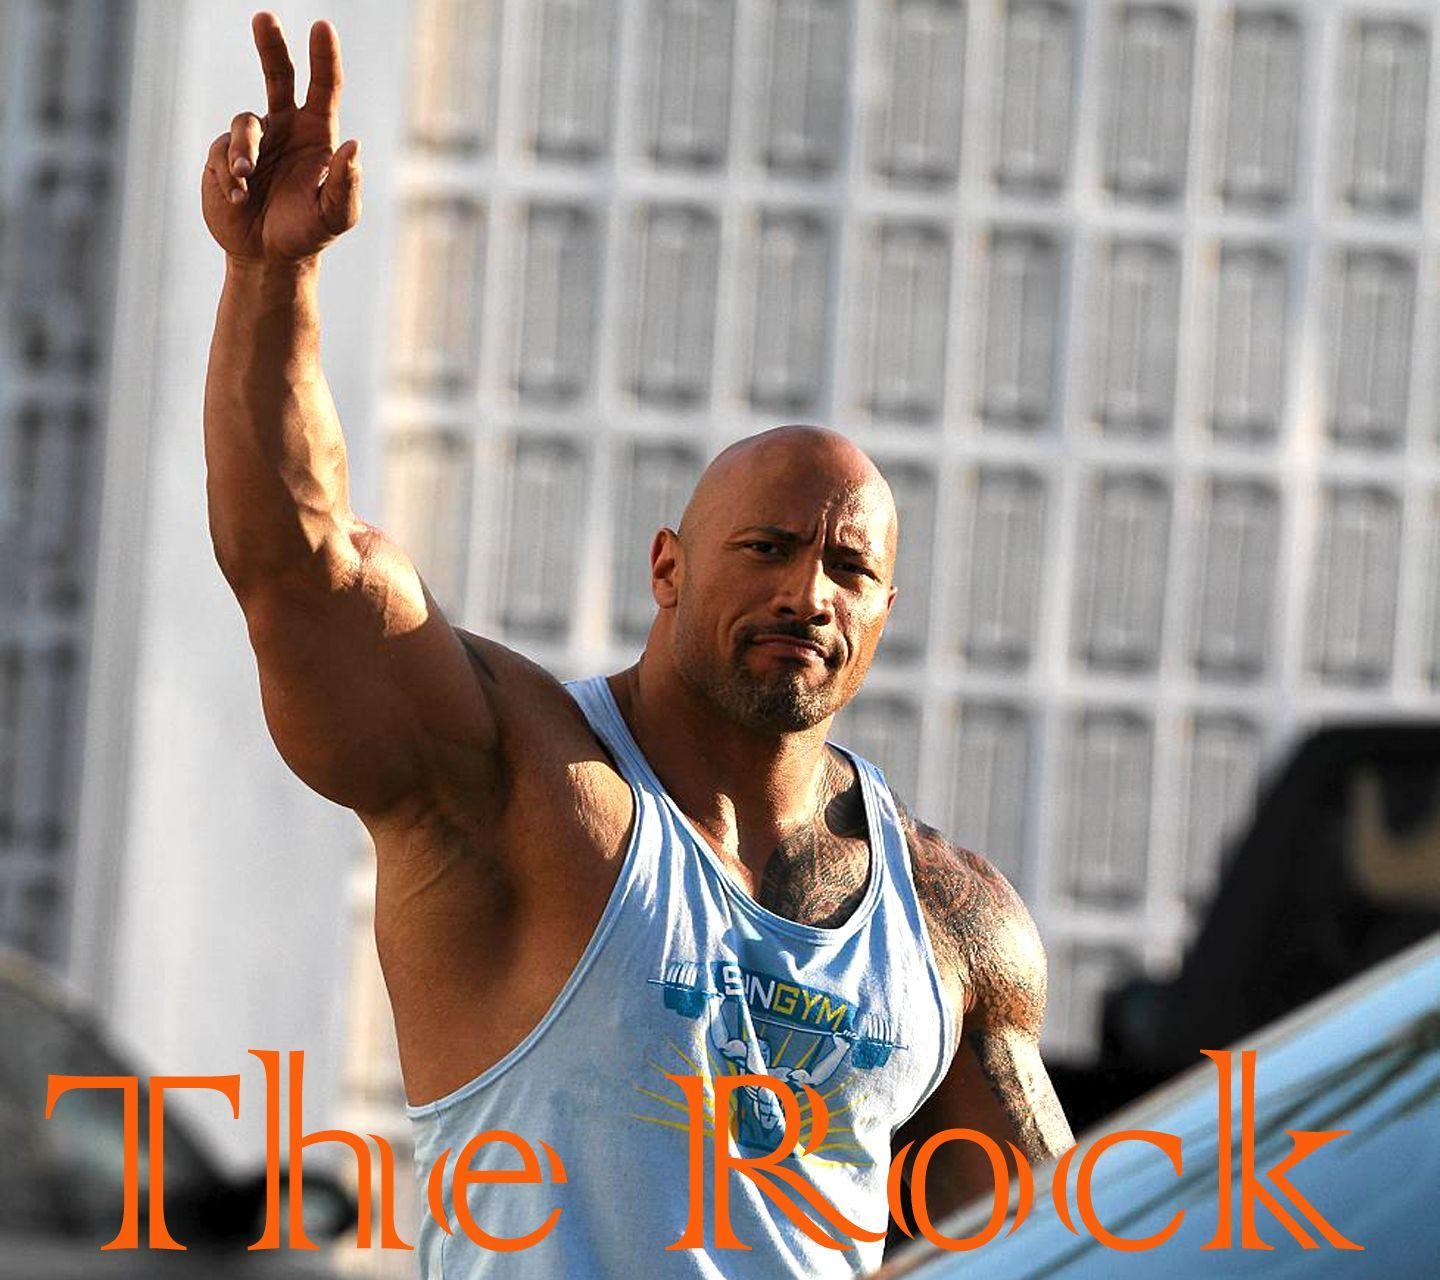 200+] The Rock Wallpapers | Wallpapers.com